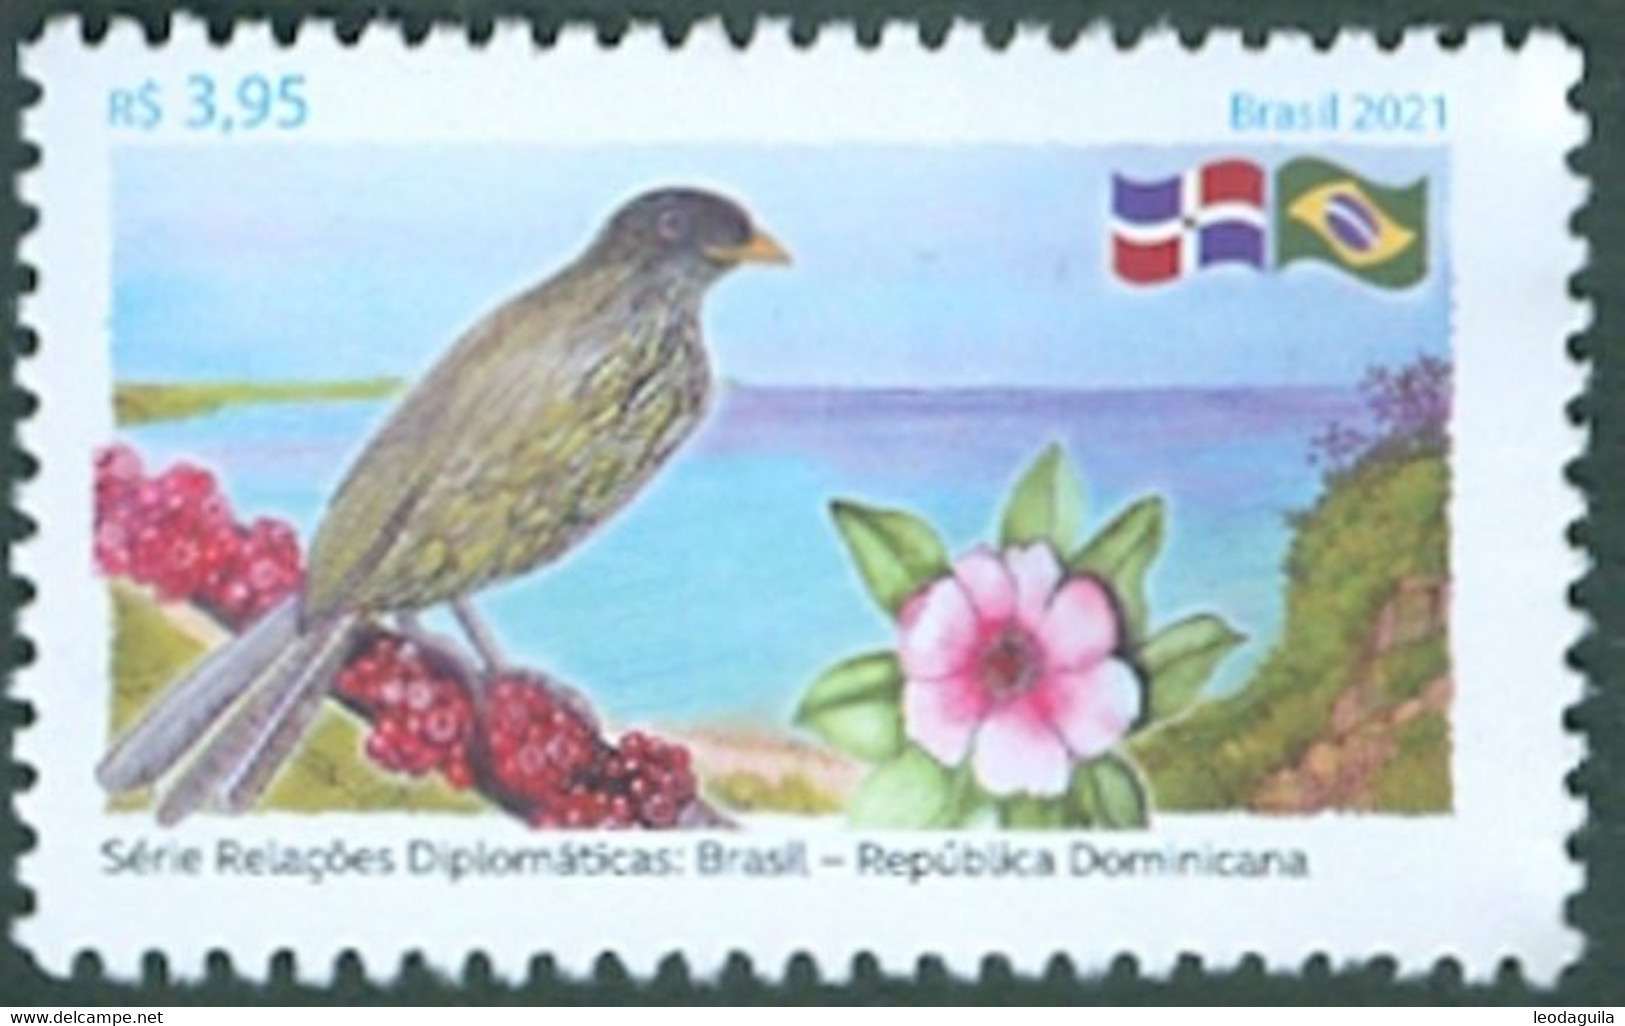 BRAZIL #4816 - BIRD PALMCHAT / CIGUA PALMERA  - LANDSCAPE - FLOWER  - 2021 - MINT - Unused Stamps